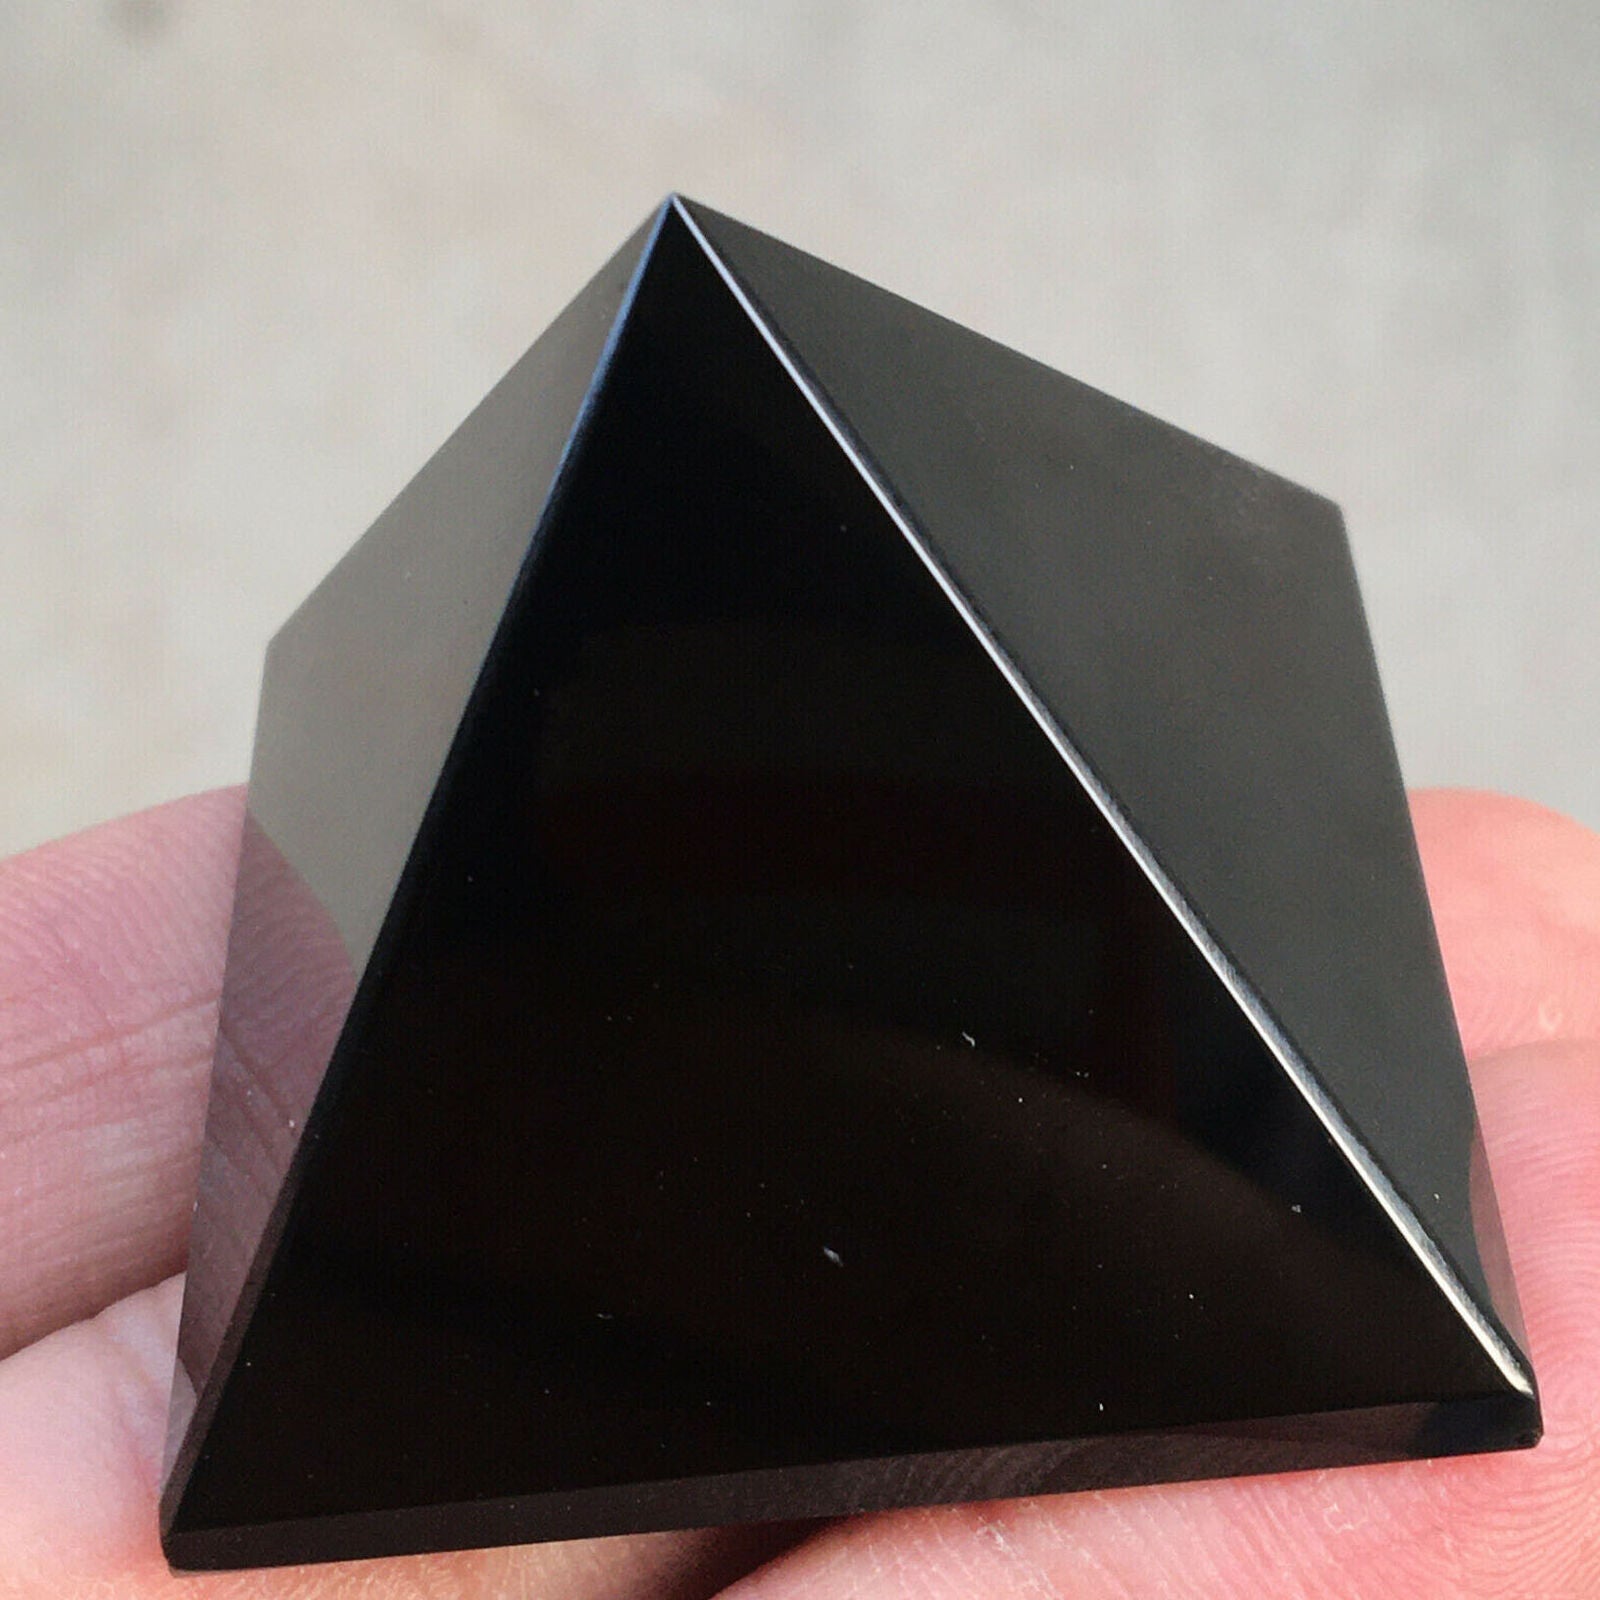 Obsidian Pyramid Black Quartz Crystal Pyramid Healing Stone Rock Home Decor Gift